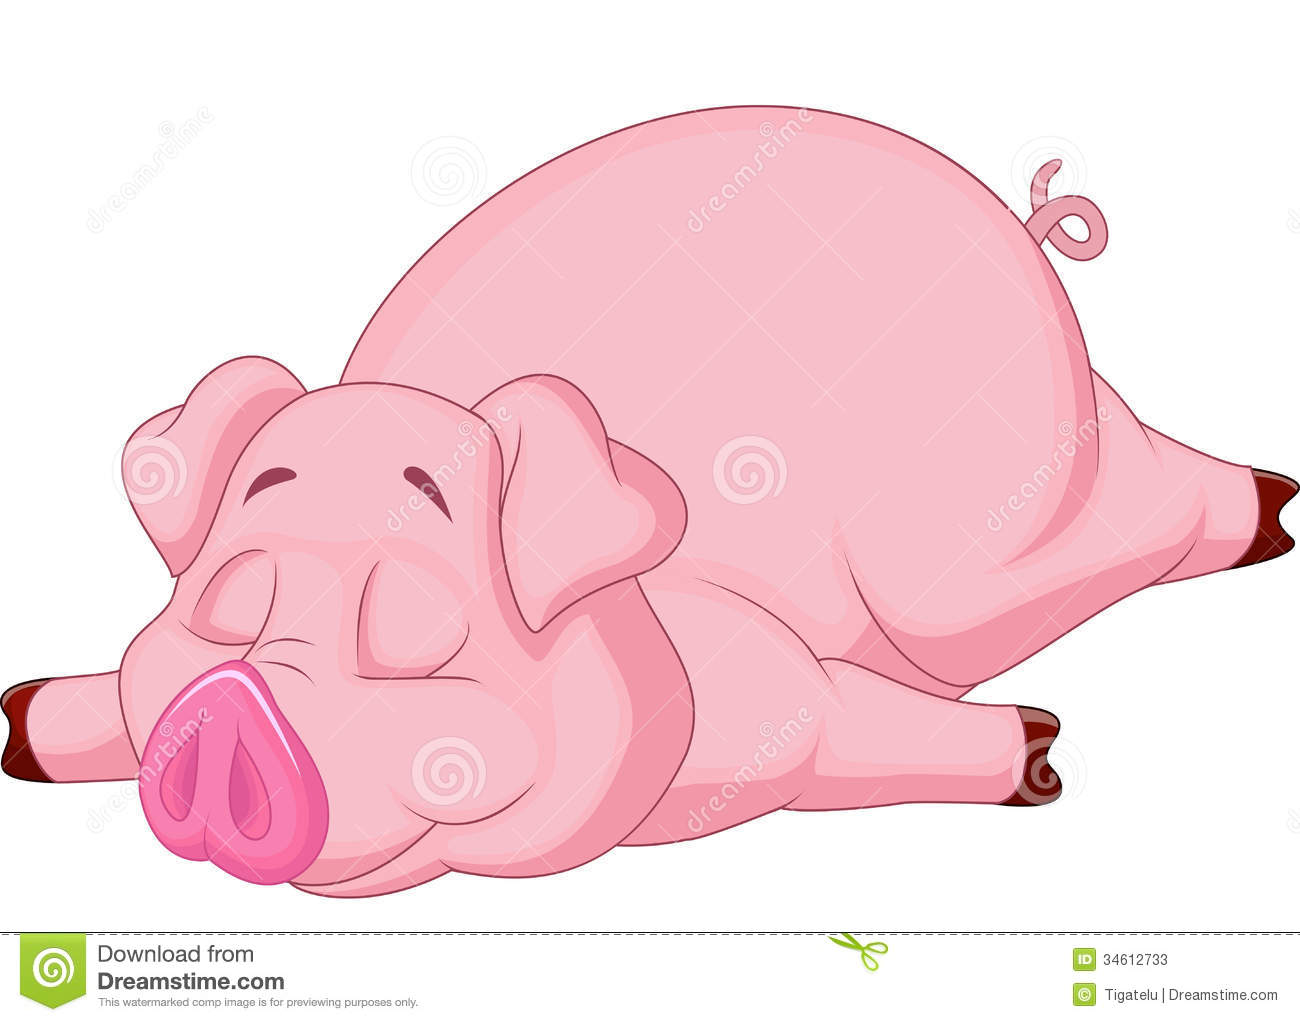 Cute Pig Cartoon Sleeping Stock Photos   Image  34612733